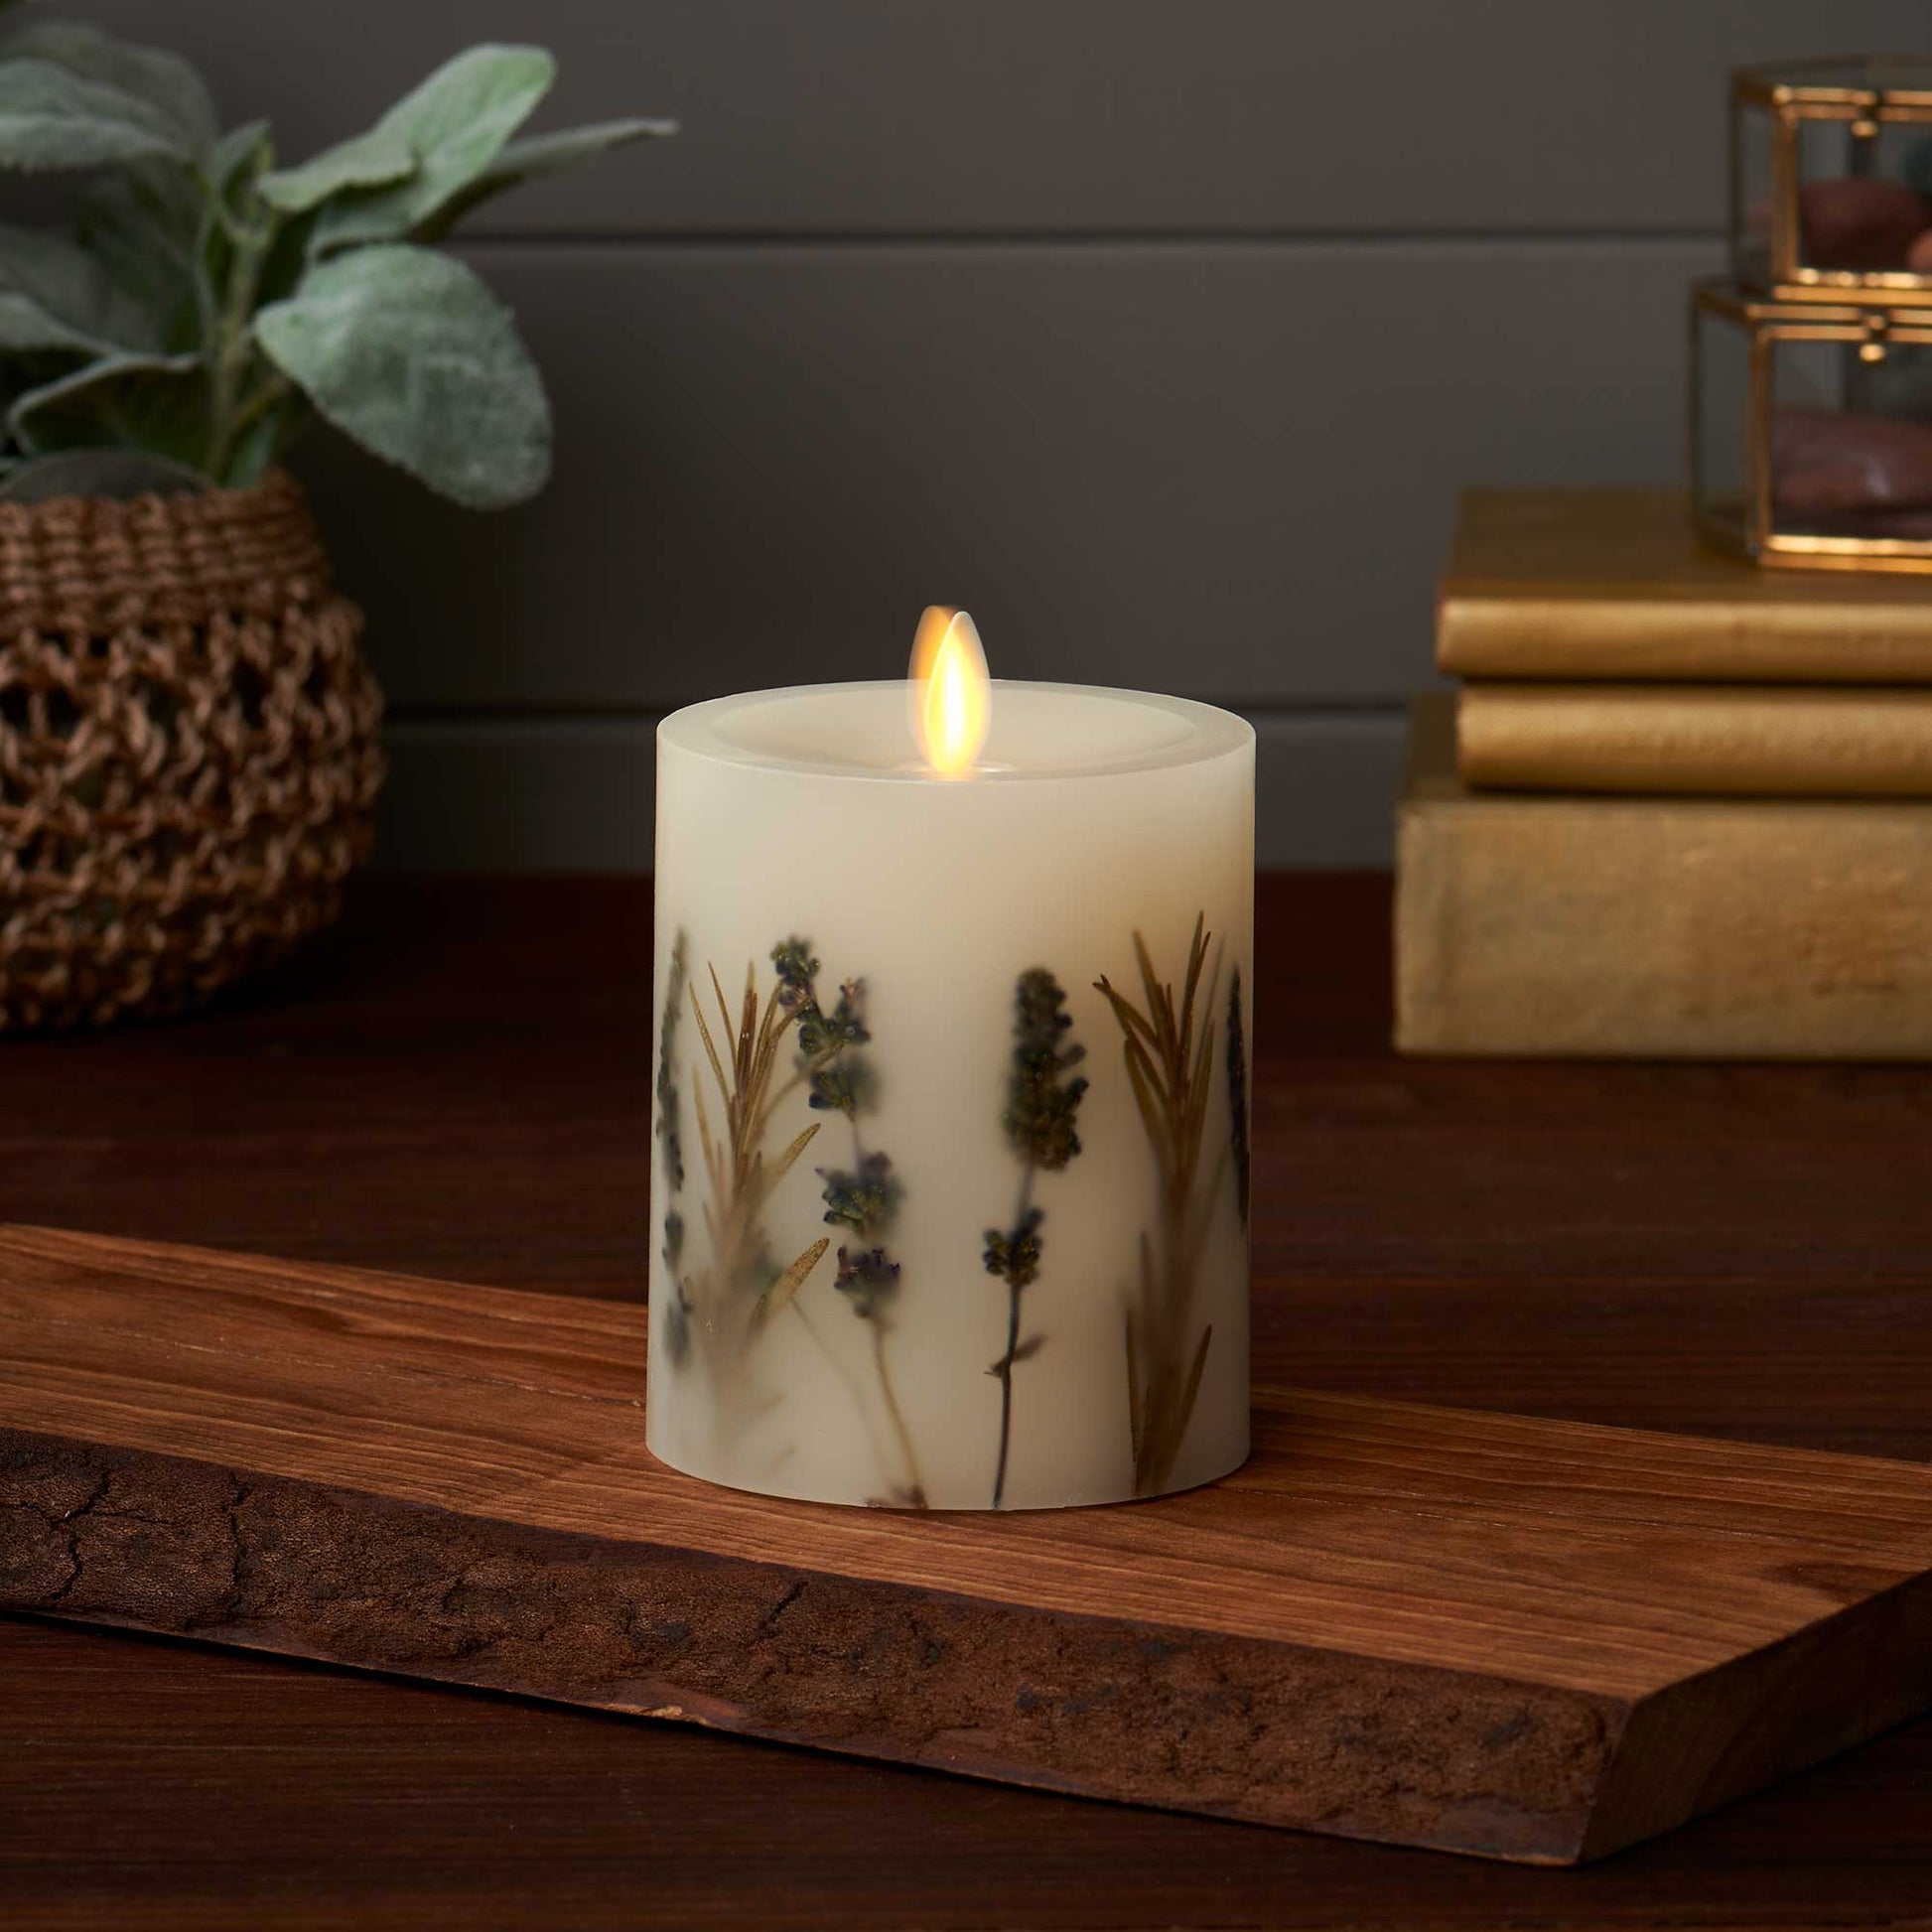 Luminara's Flameless Embedded Lavender Rosemary Candle Pillar